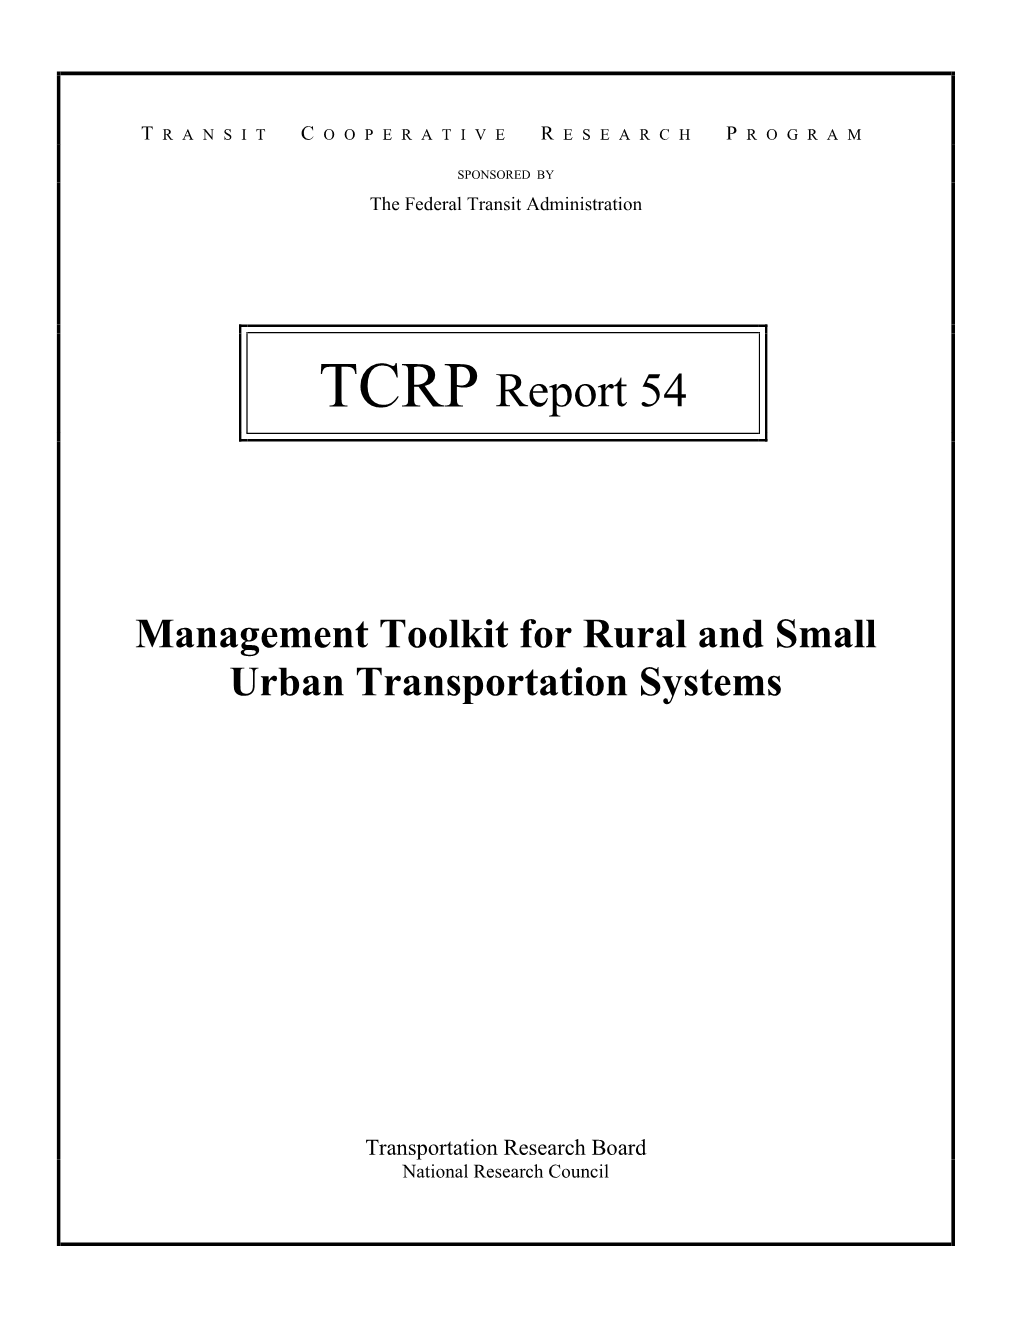 TCRP Report 54